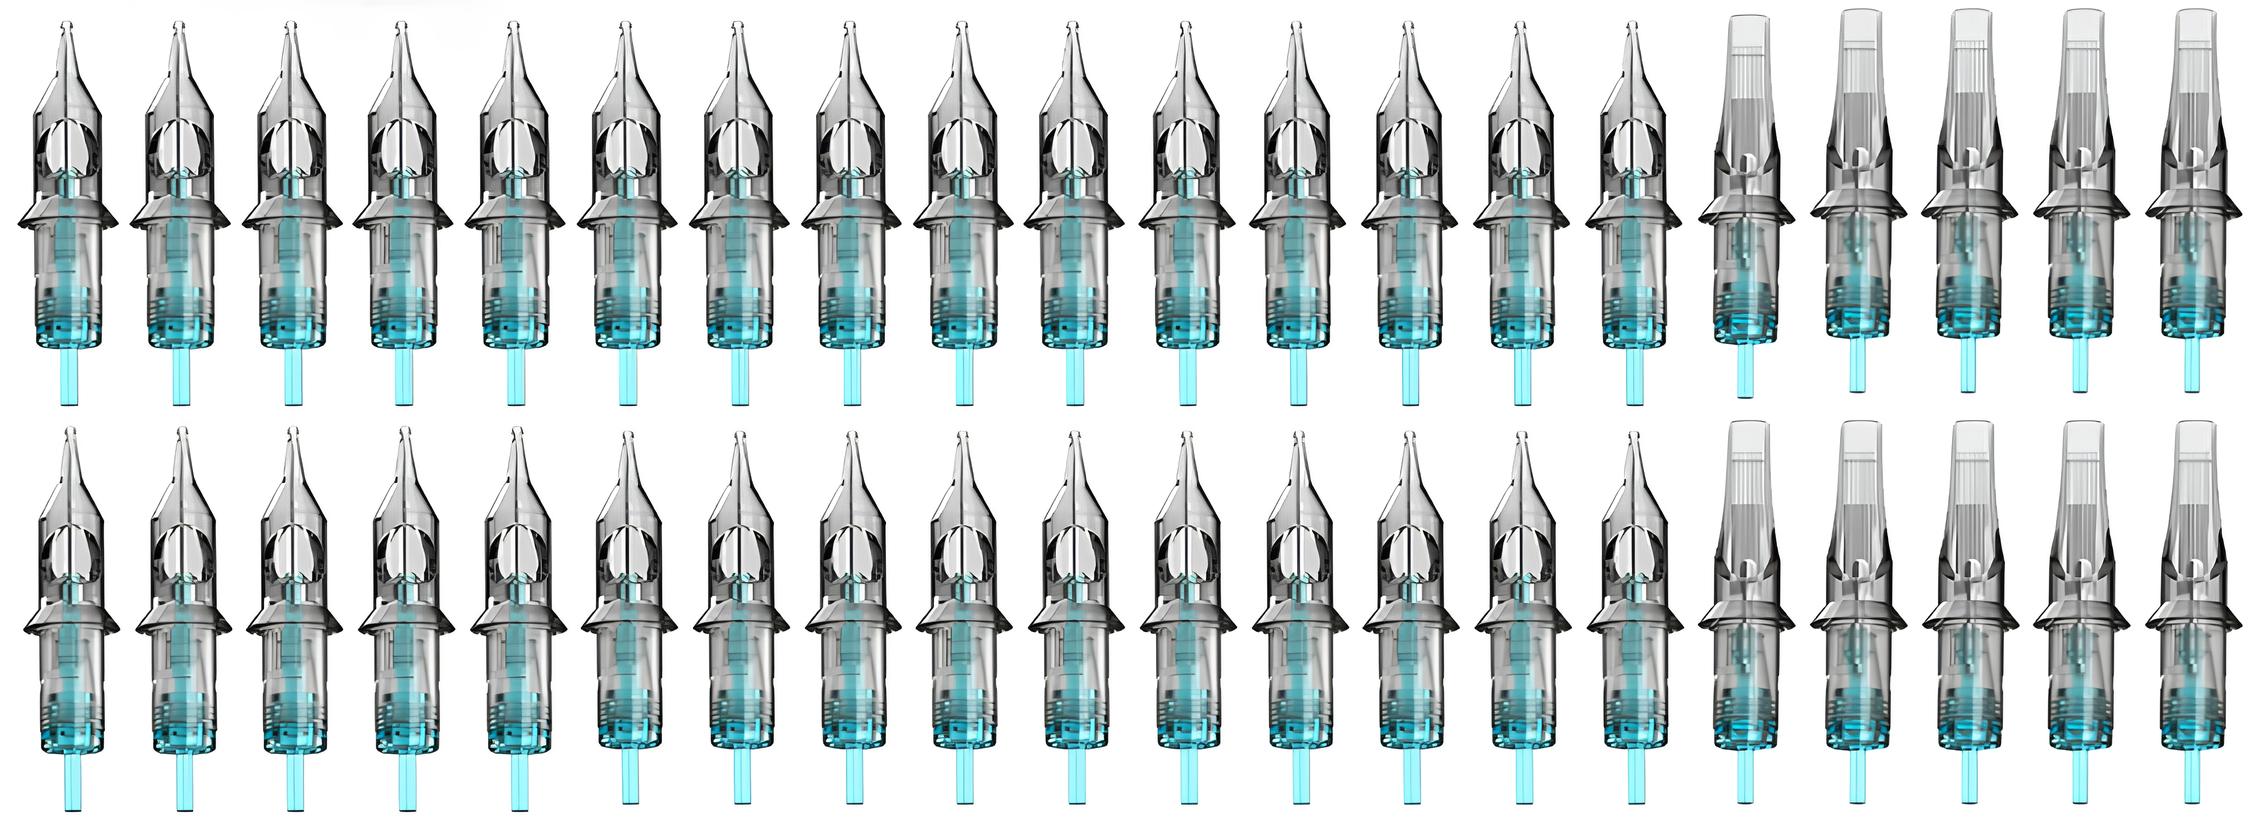 cartridges needles